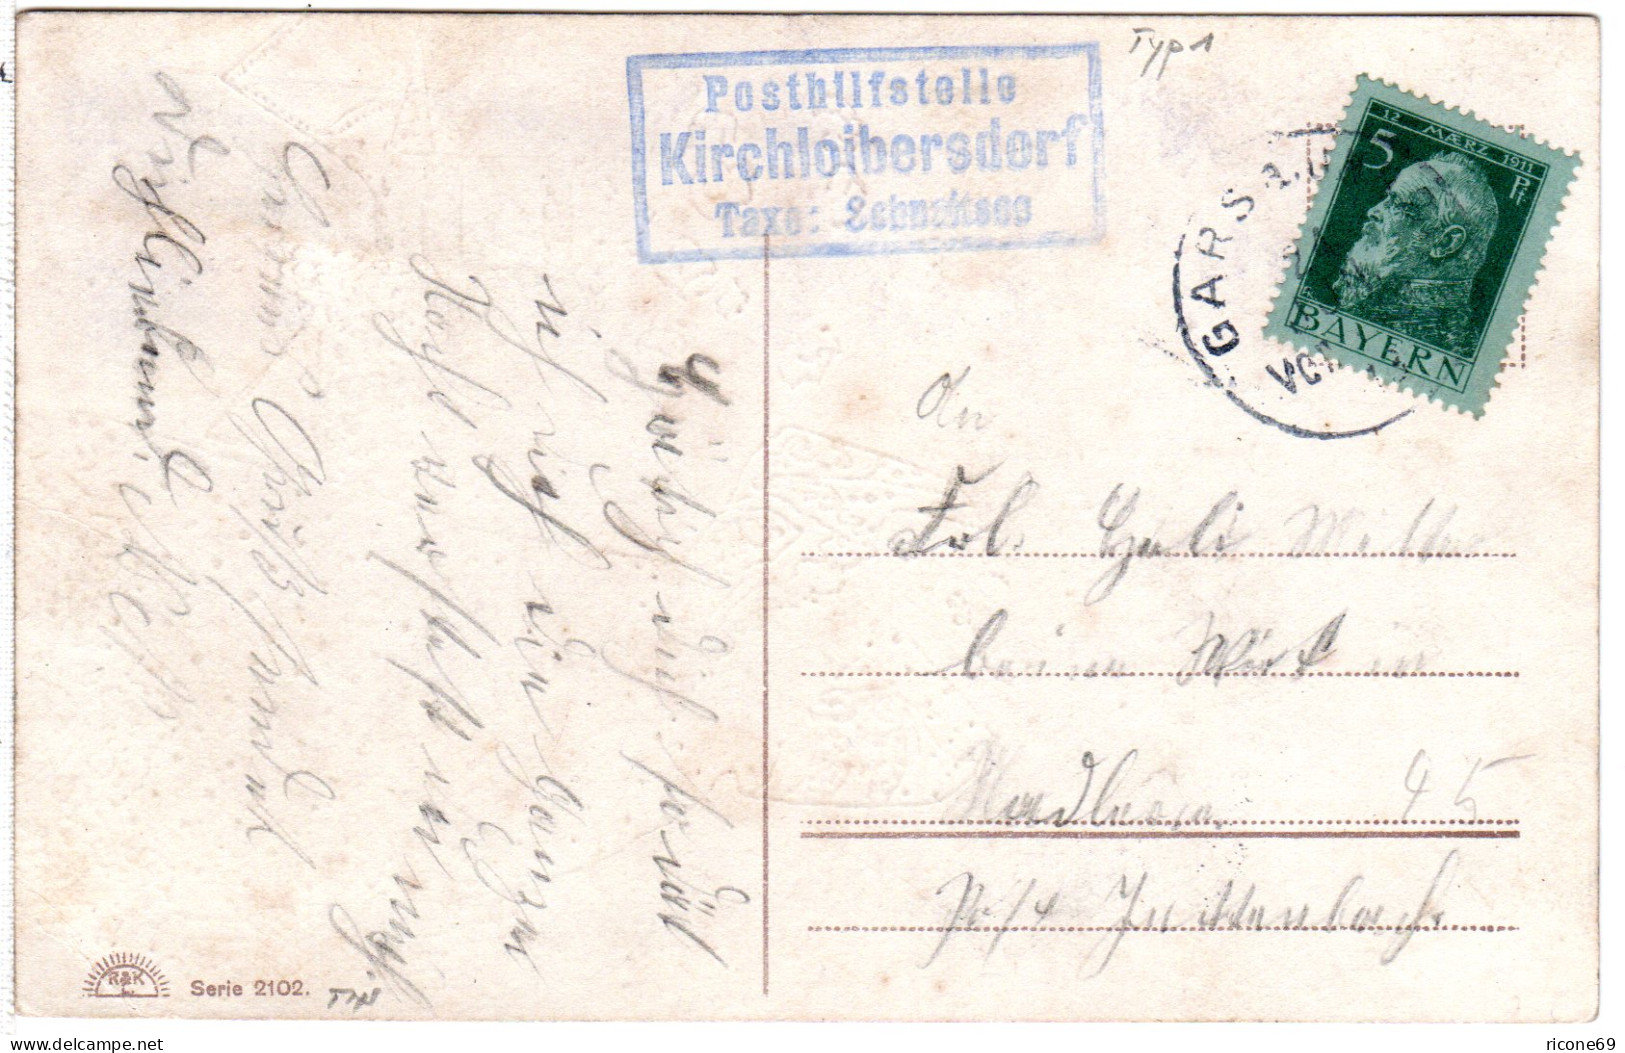 Bayern 1913, Posthilfstelle KIRCHLOIBERSDORF Taxe Schnaitsee Auf Karte M. 5 Pf. - Storia Postale